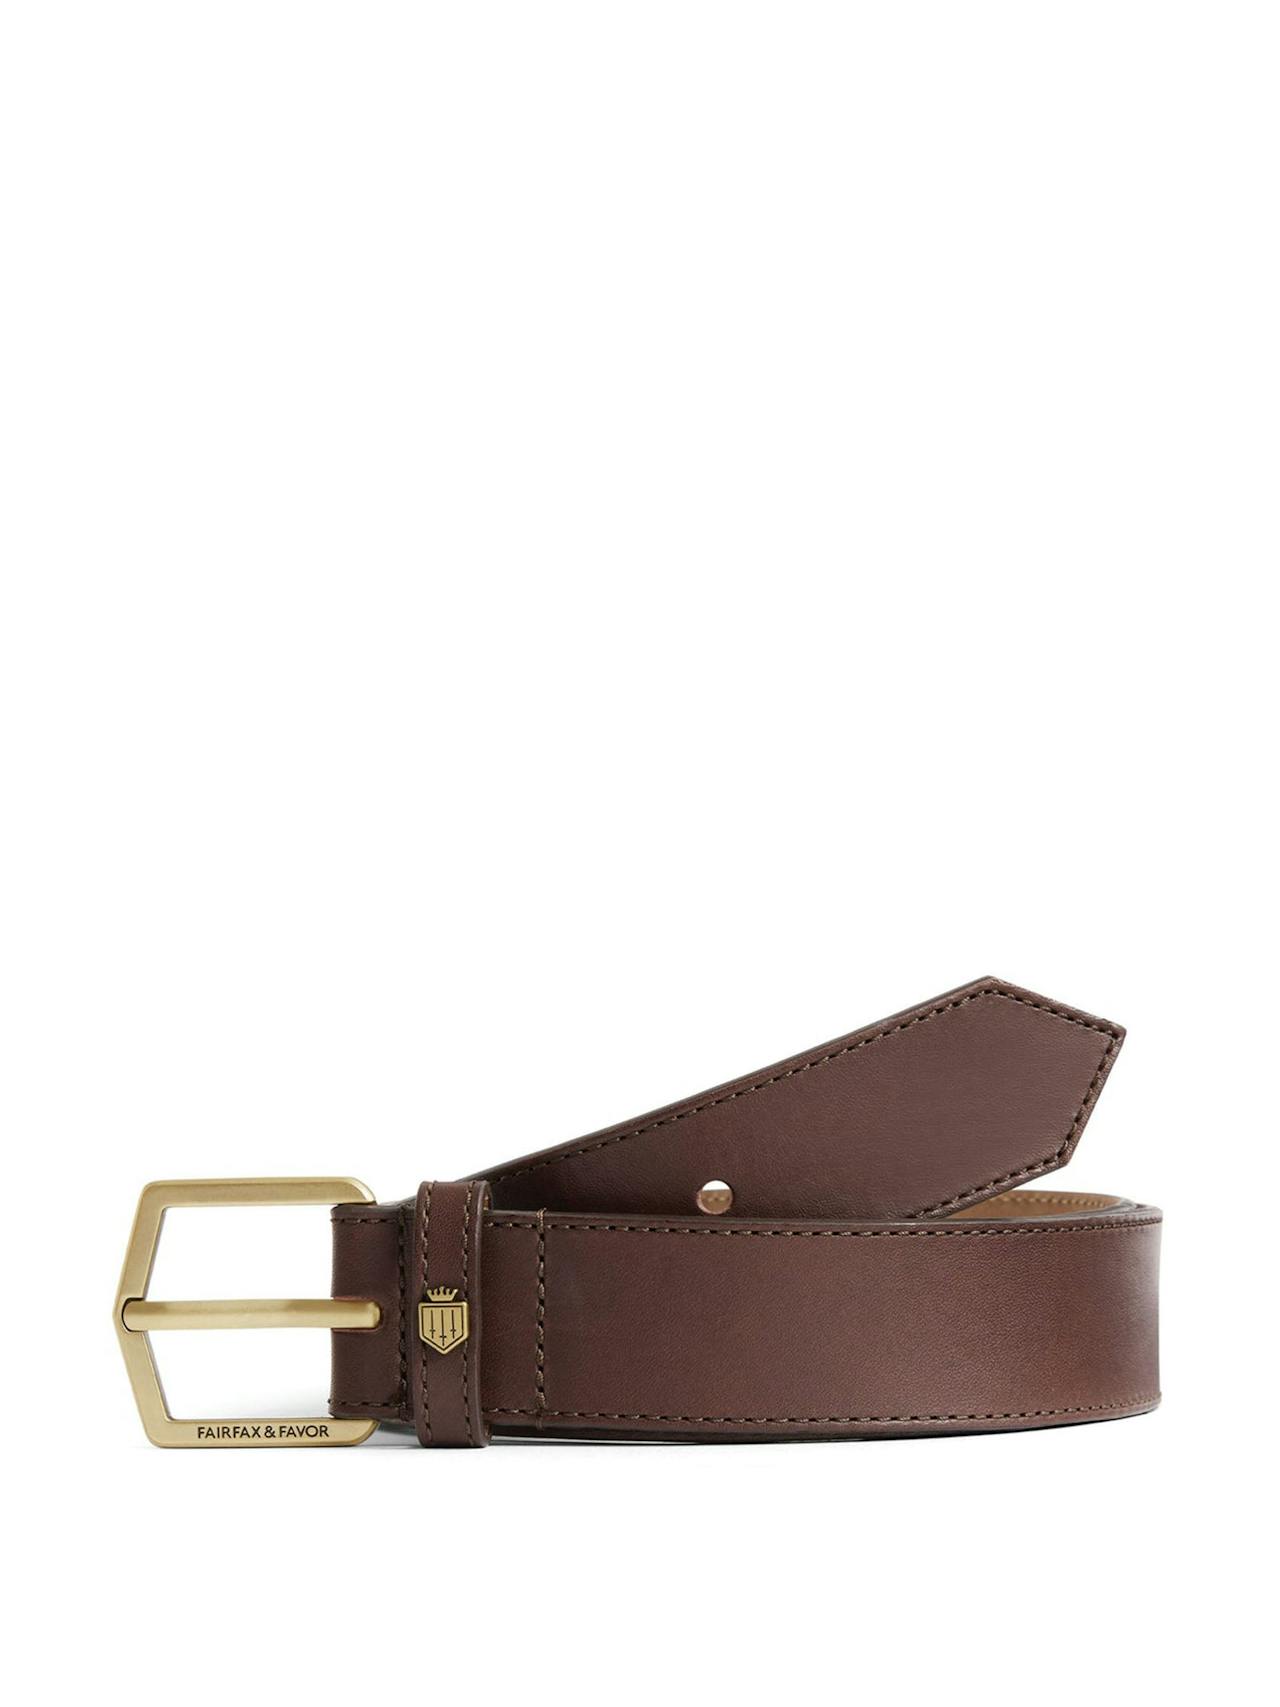 Brown leather belt